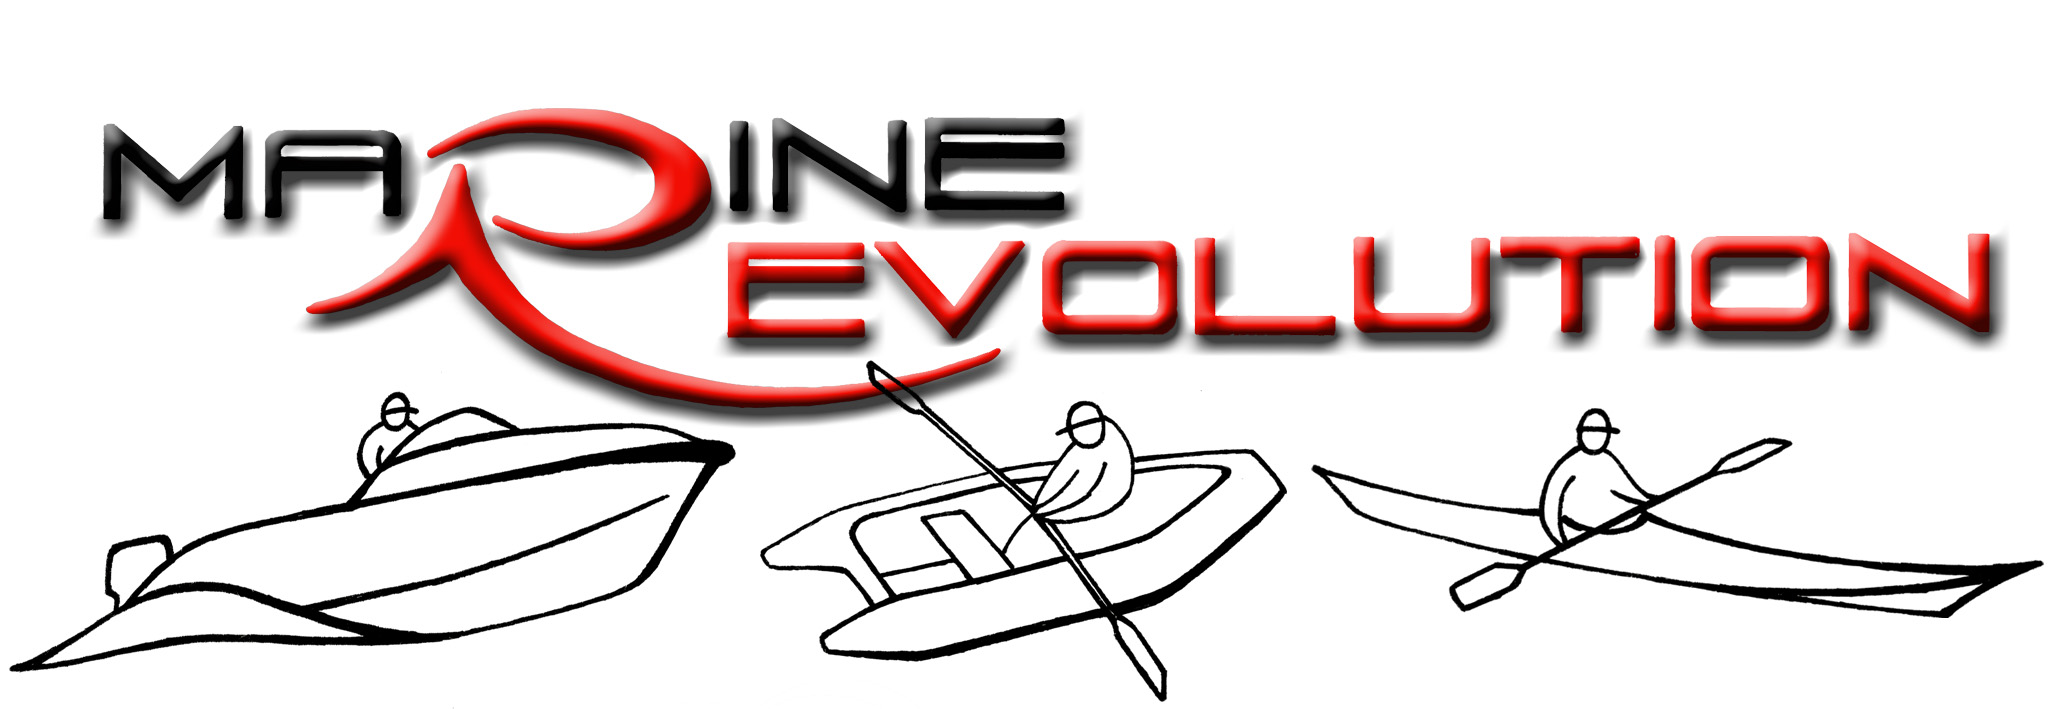 Marine Revolution Ltd